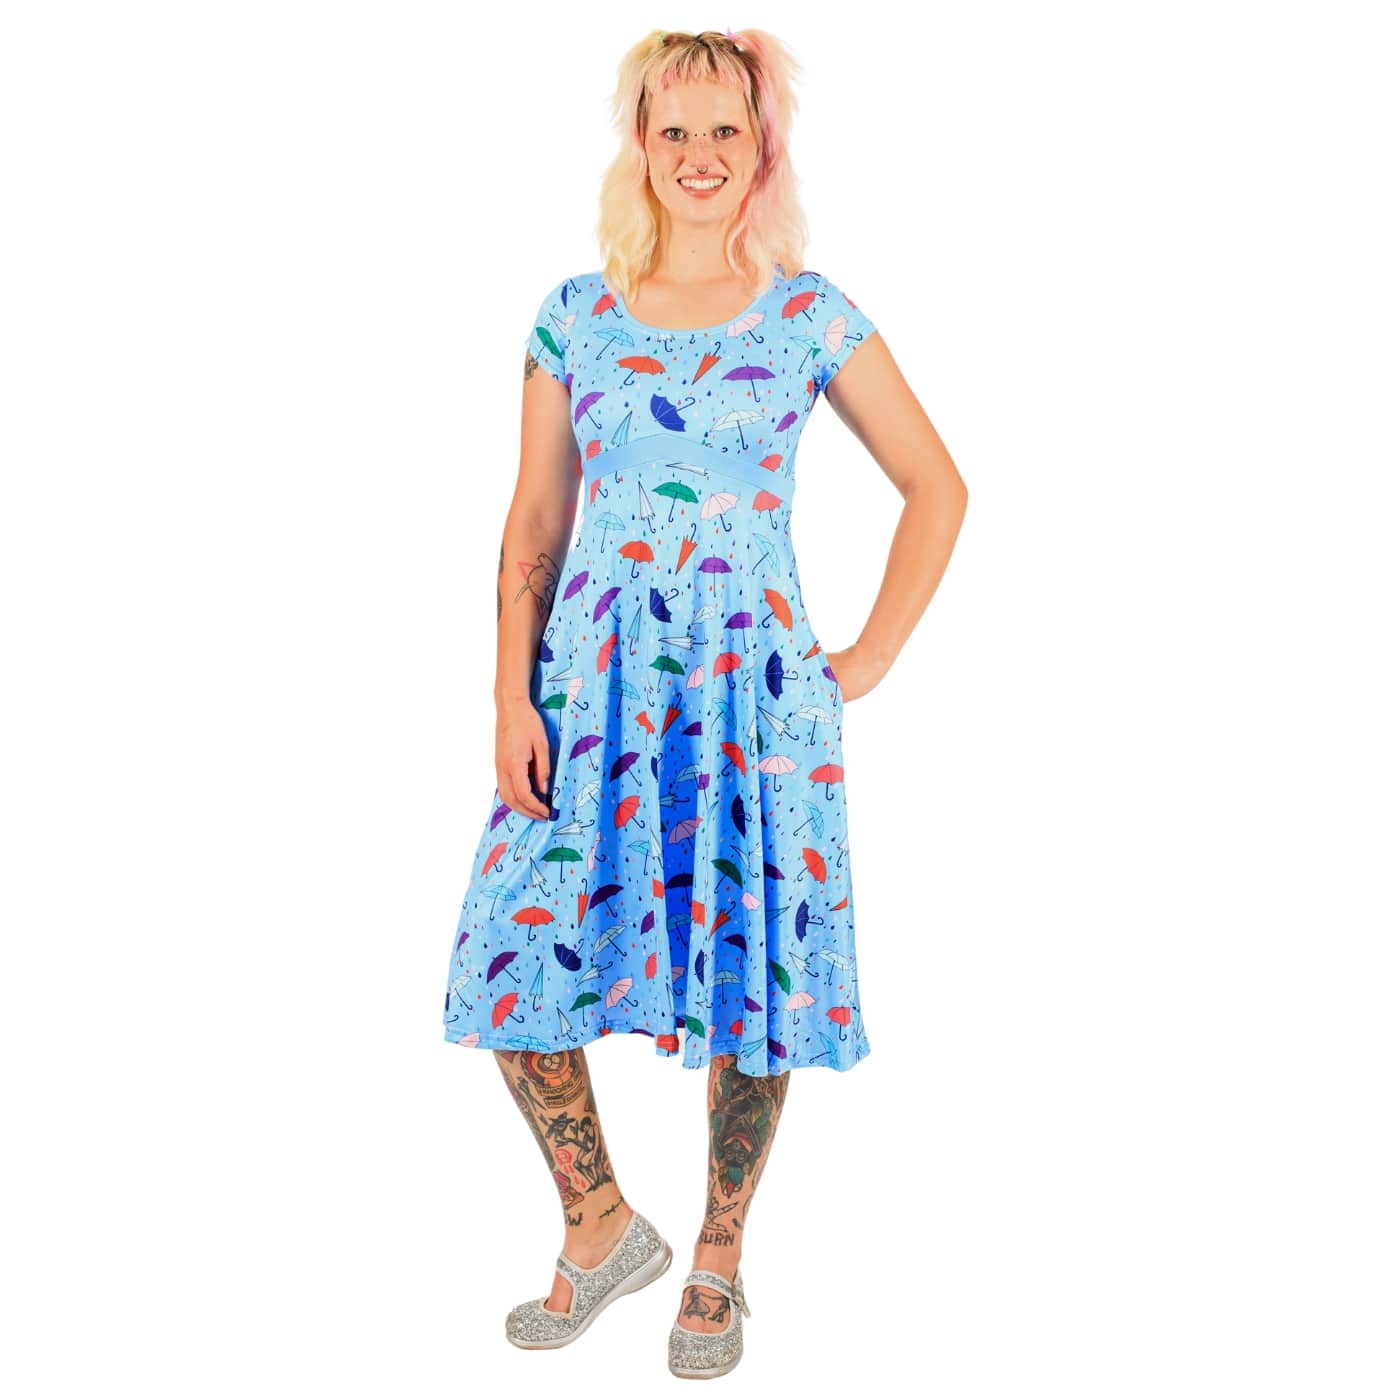 Brolly Tea Dress by RainbowsAndFairies.com (Umbrella - Rain - Raindrops - Dress With Pockets - Rockabilly - Vintage Inspired) - SKU: CL_TEADR_BROLL_ORG - Pic 02